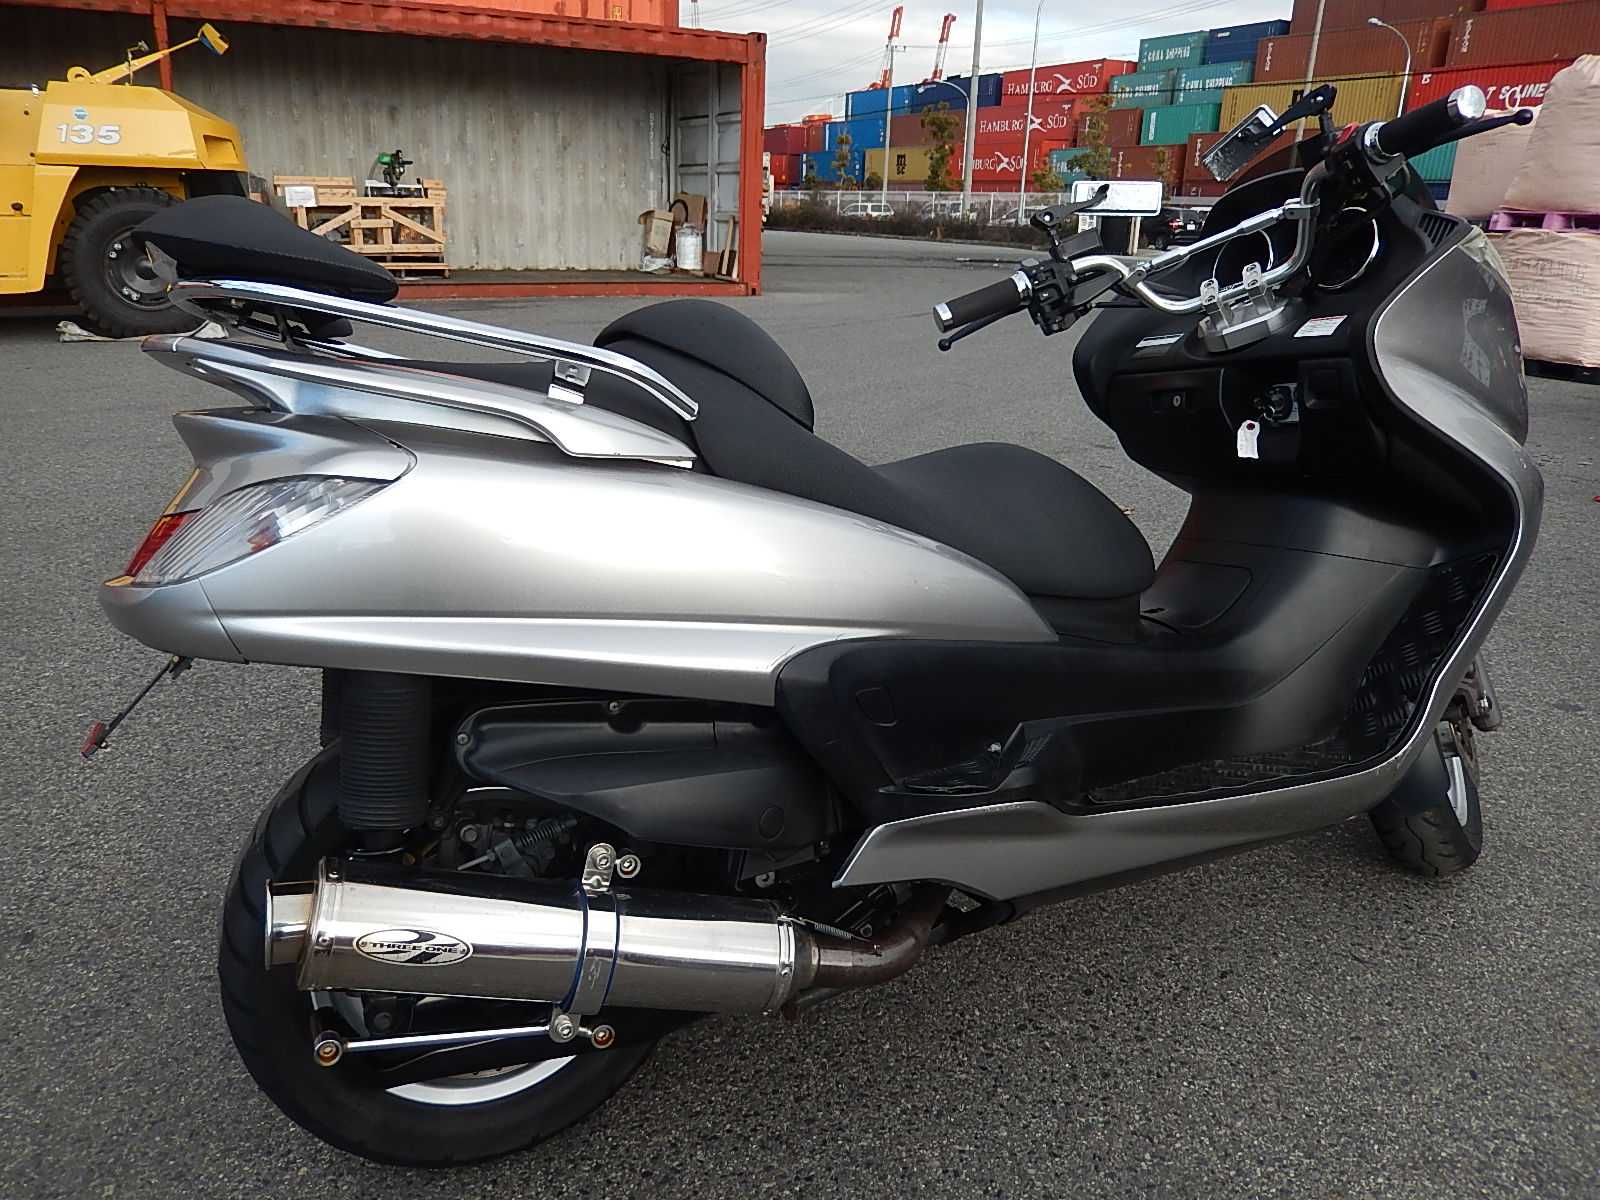 Yamaha majesty 400 обзор - мотомастерская gx-moto